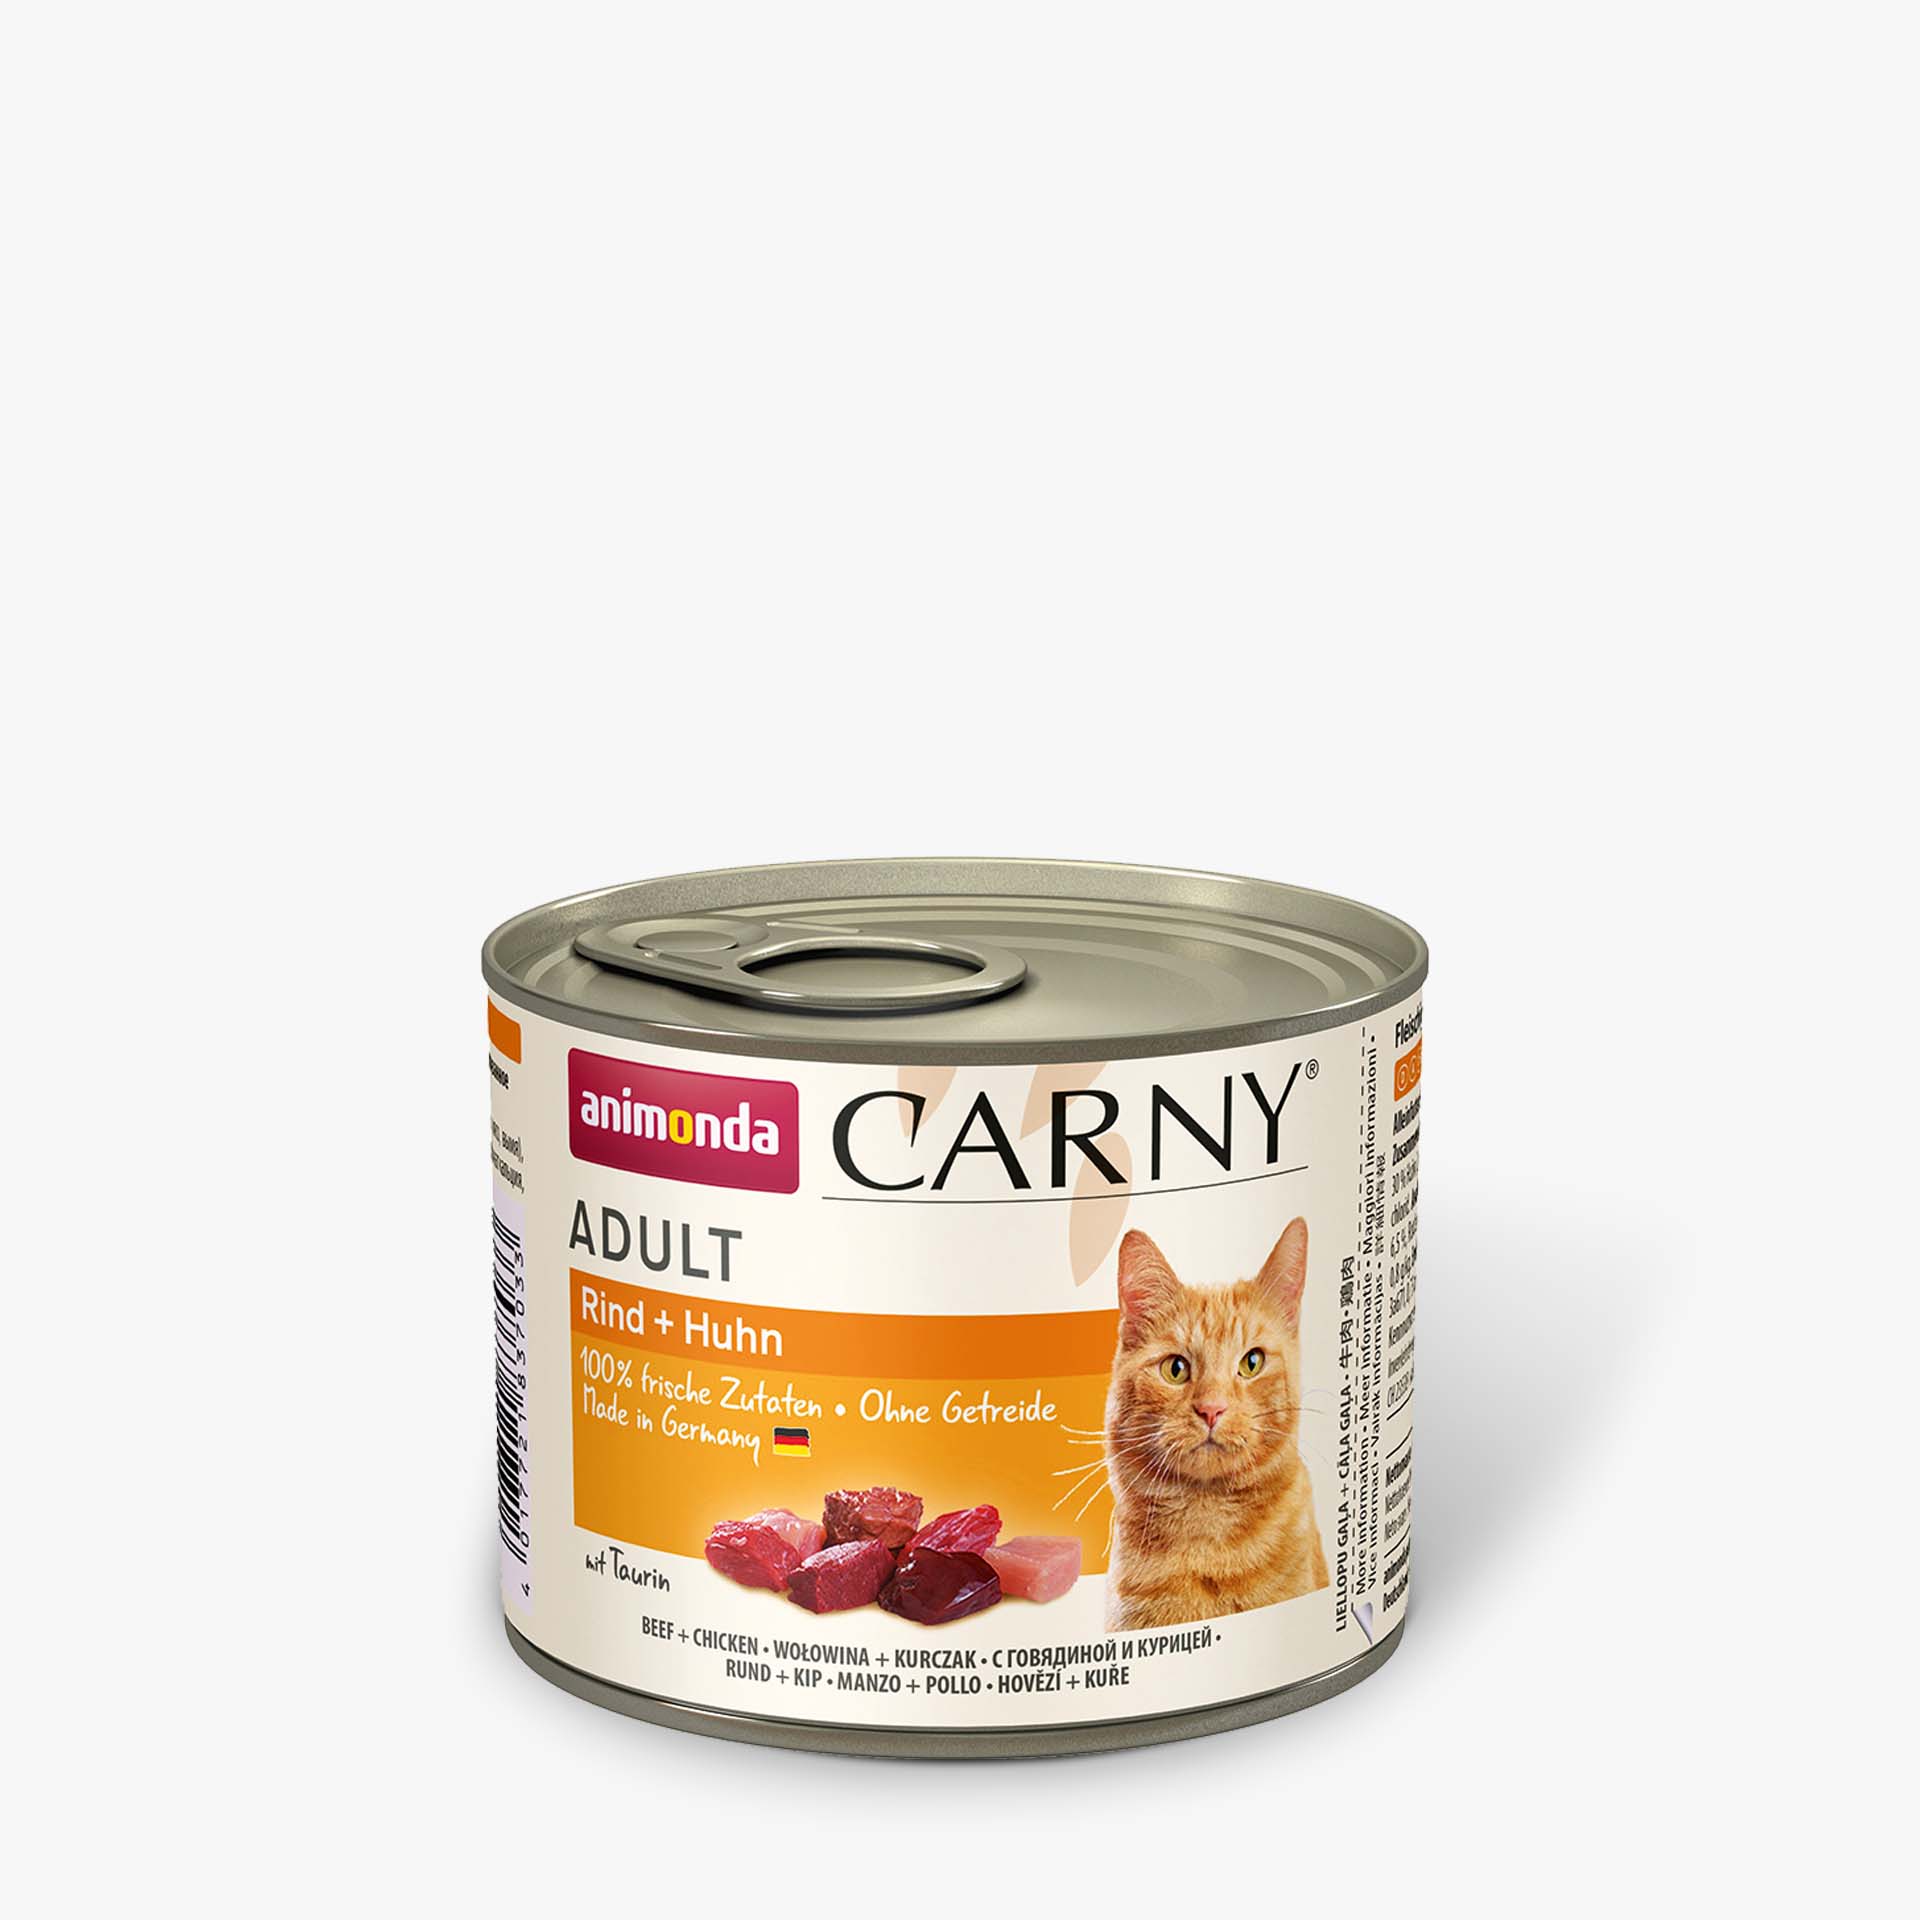 Carny Adult Rind + Huhn